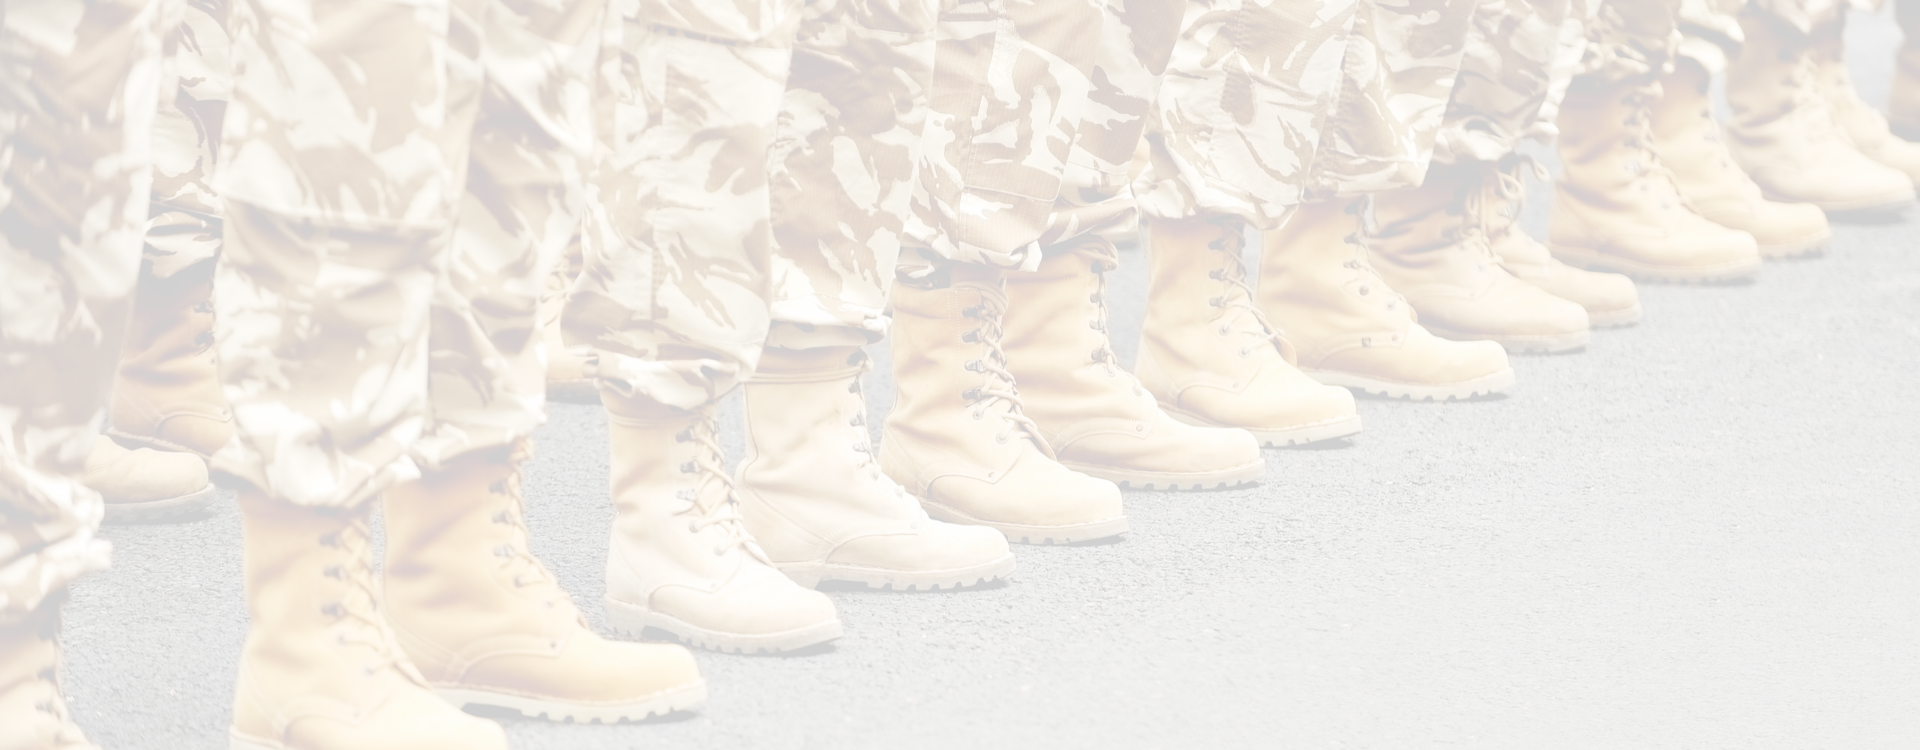 Move It Squad Top Slider BG_1920 x 750_military boots_white overlay